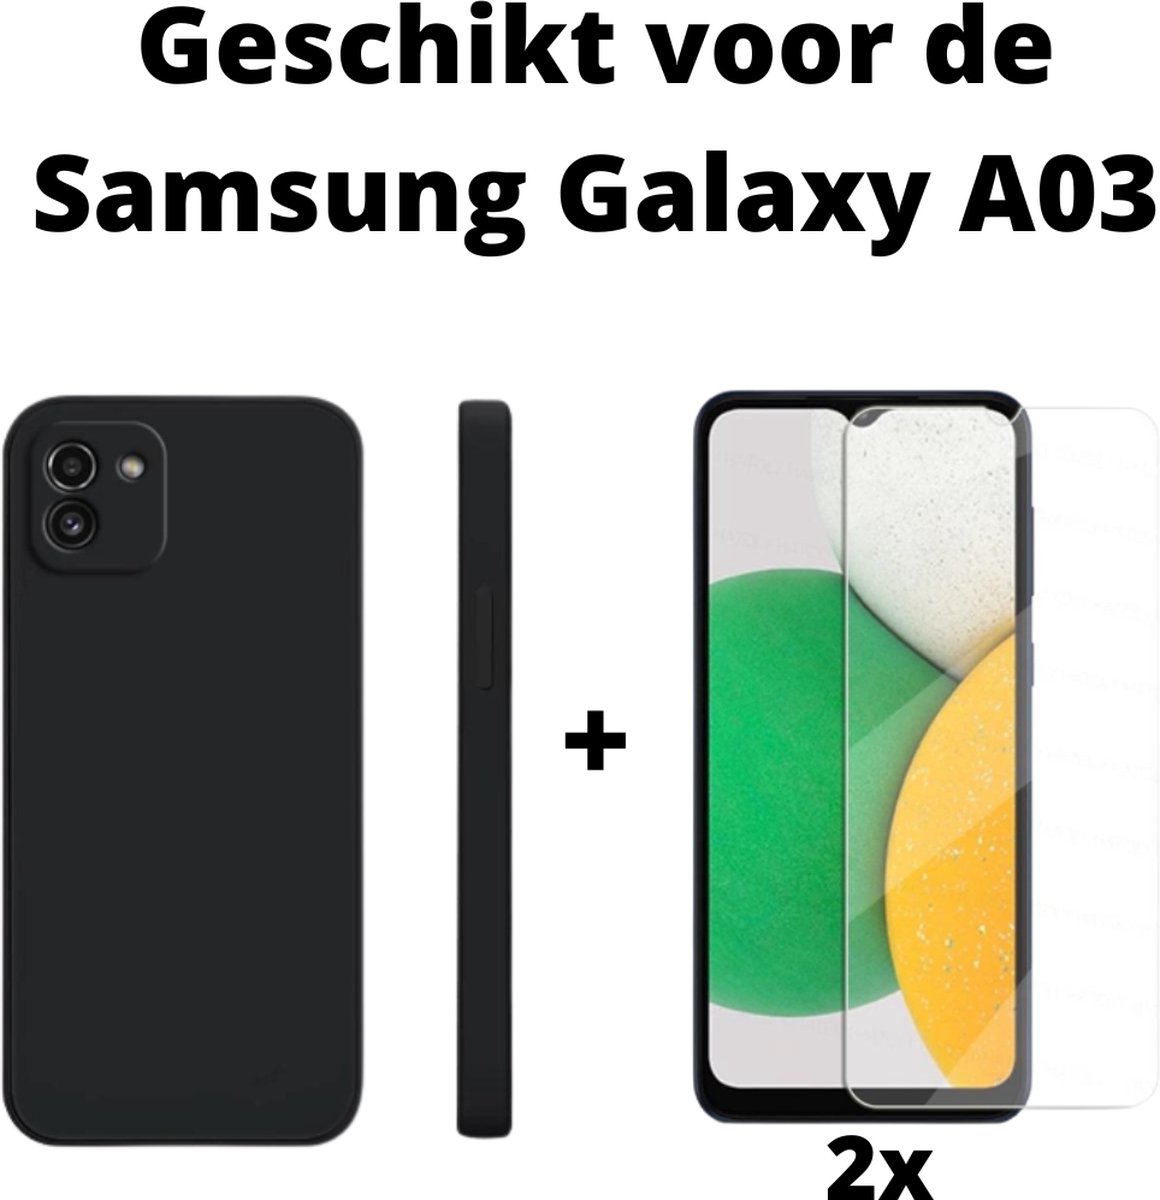 Samsung Galaxy A03 Achterkant Hoesje Zwart + 2x Screen Protector - galaxy a03 tpu backcover black + scherm protectie - Samsung A03 backcase tpu zwart + tempert glas